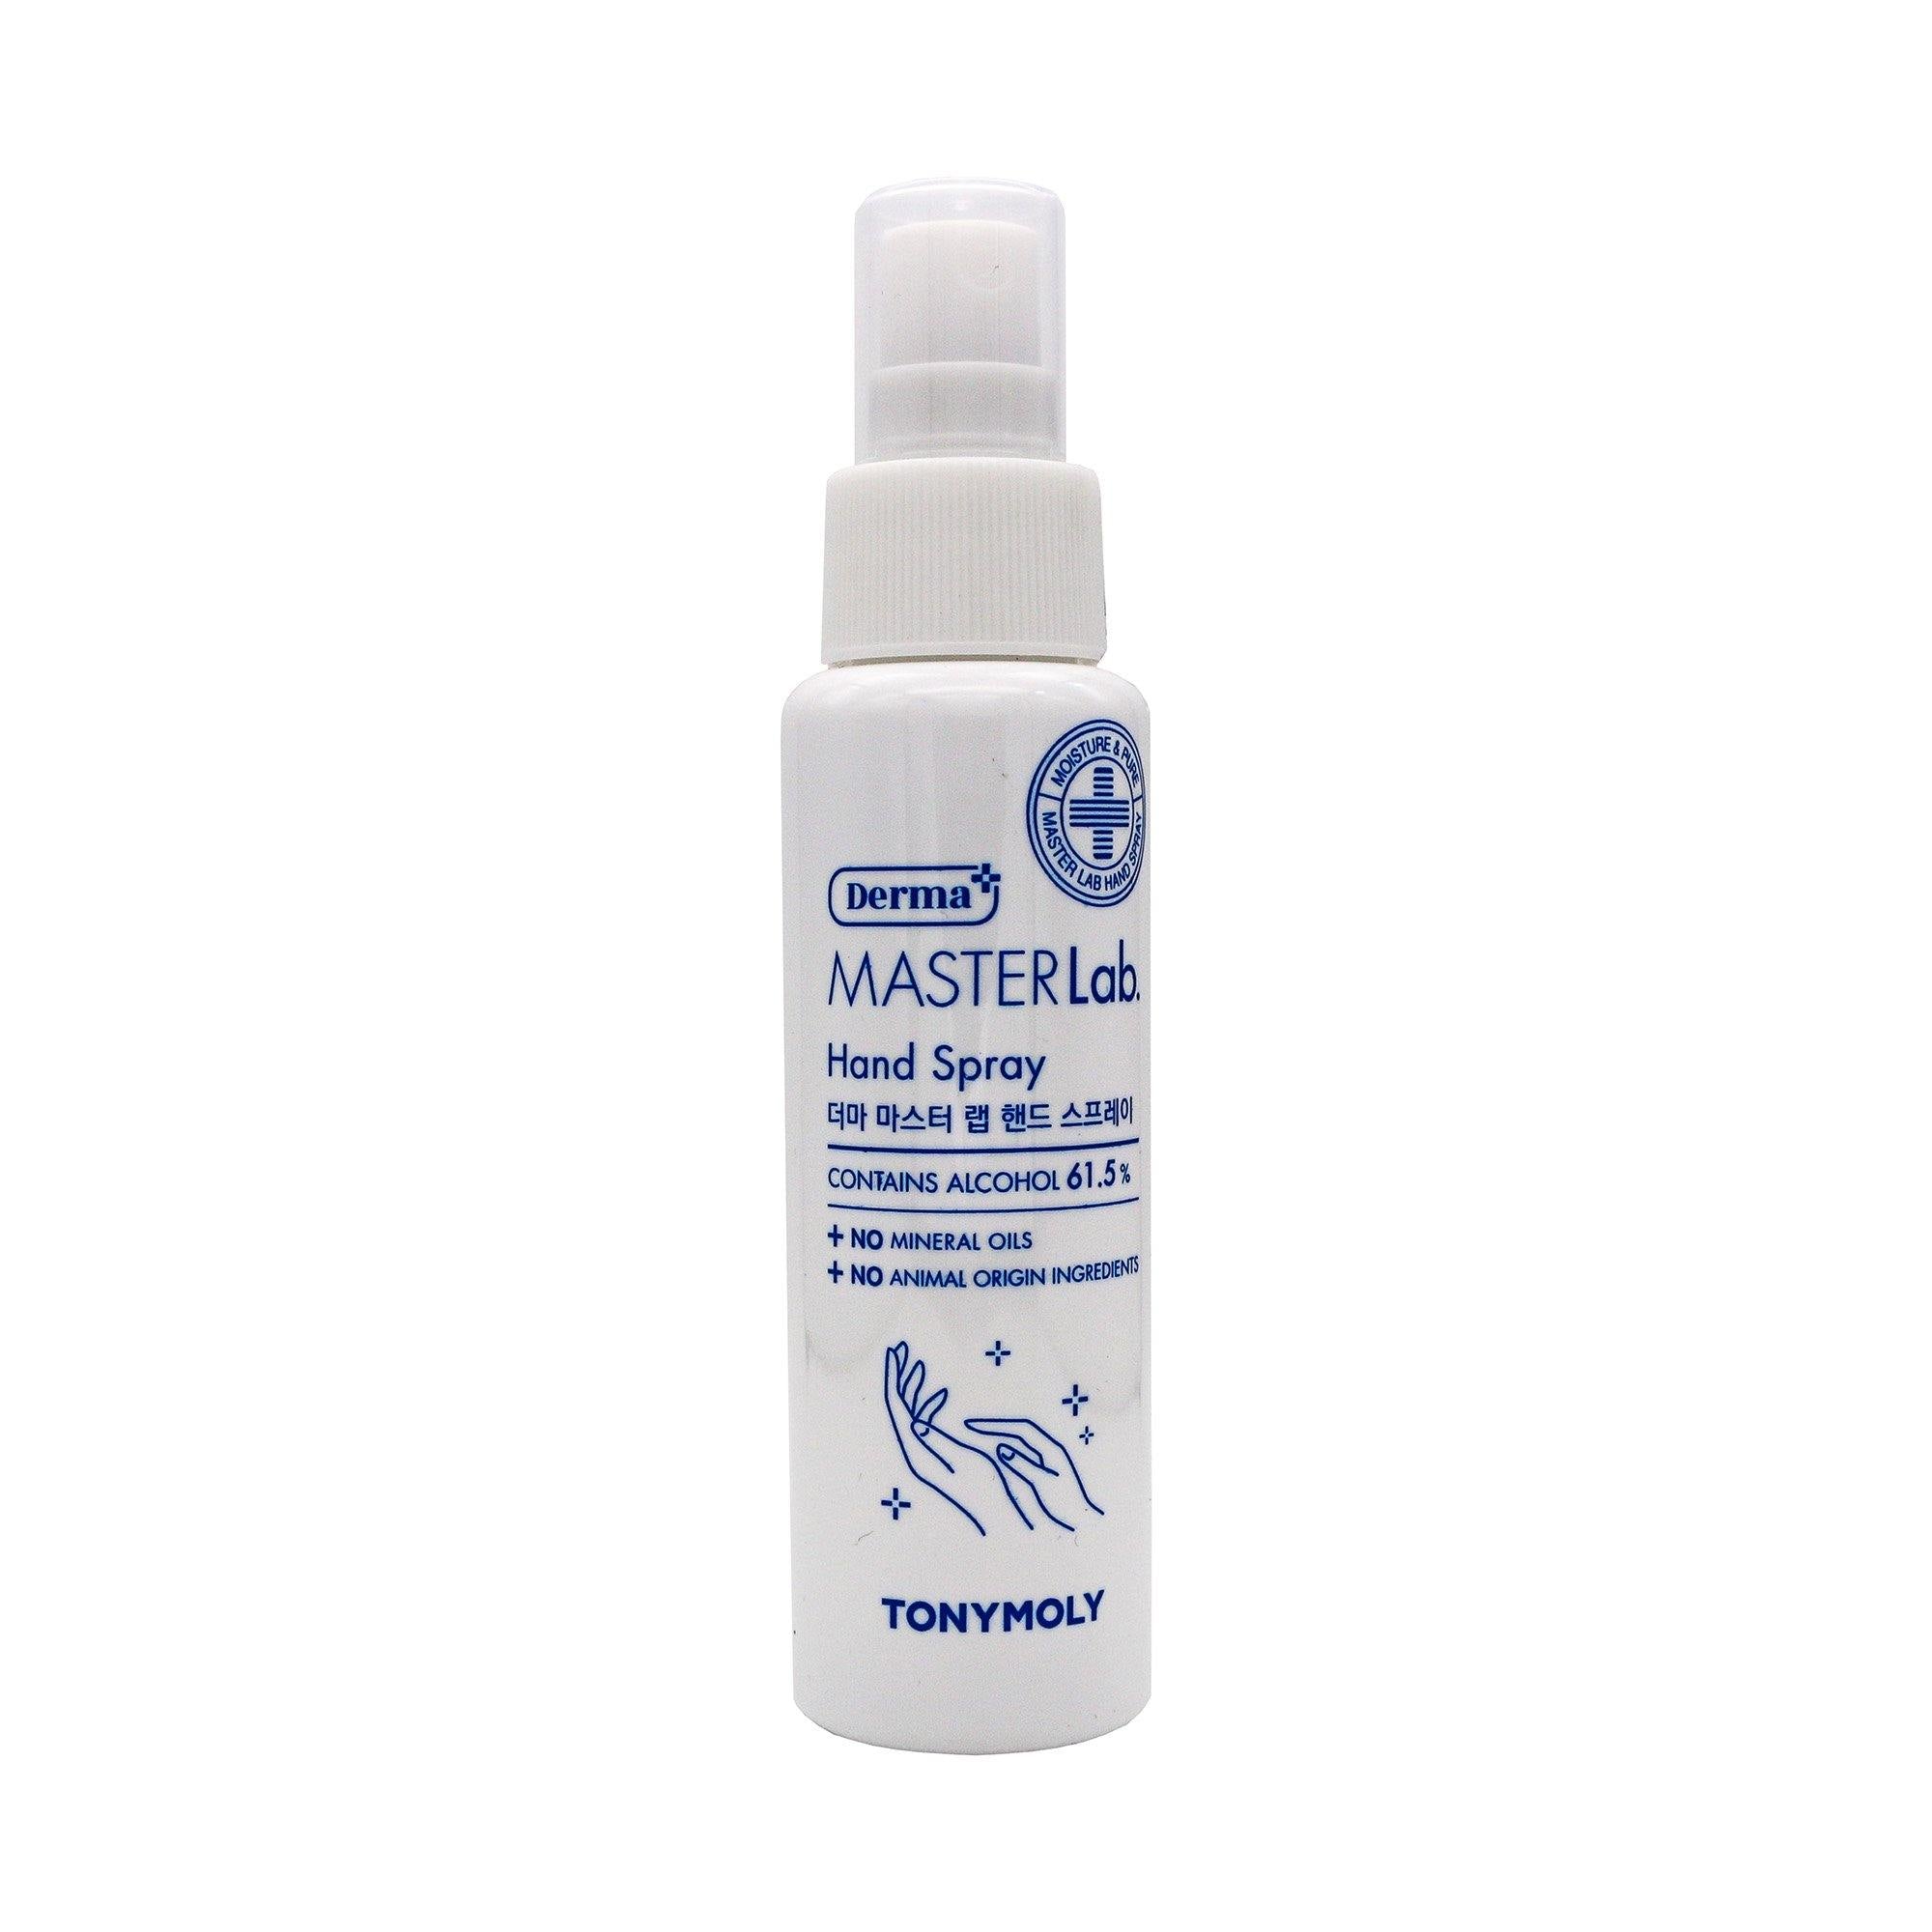 TONYMOLY MasterLab Hand Sanitising Spray 85ml - contains 61.5% alcohol - TONYMOLY OFFICIAL